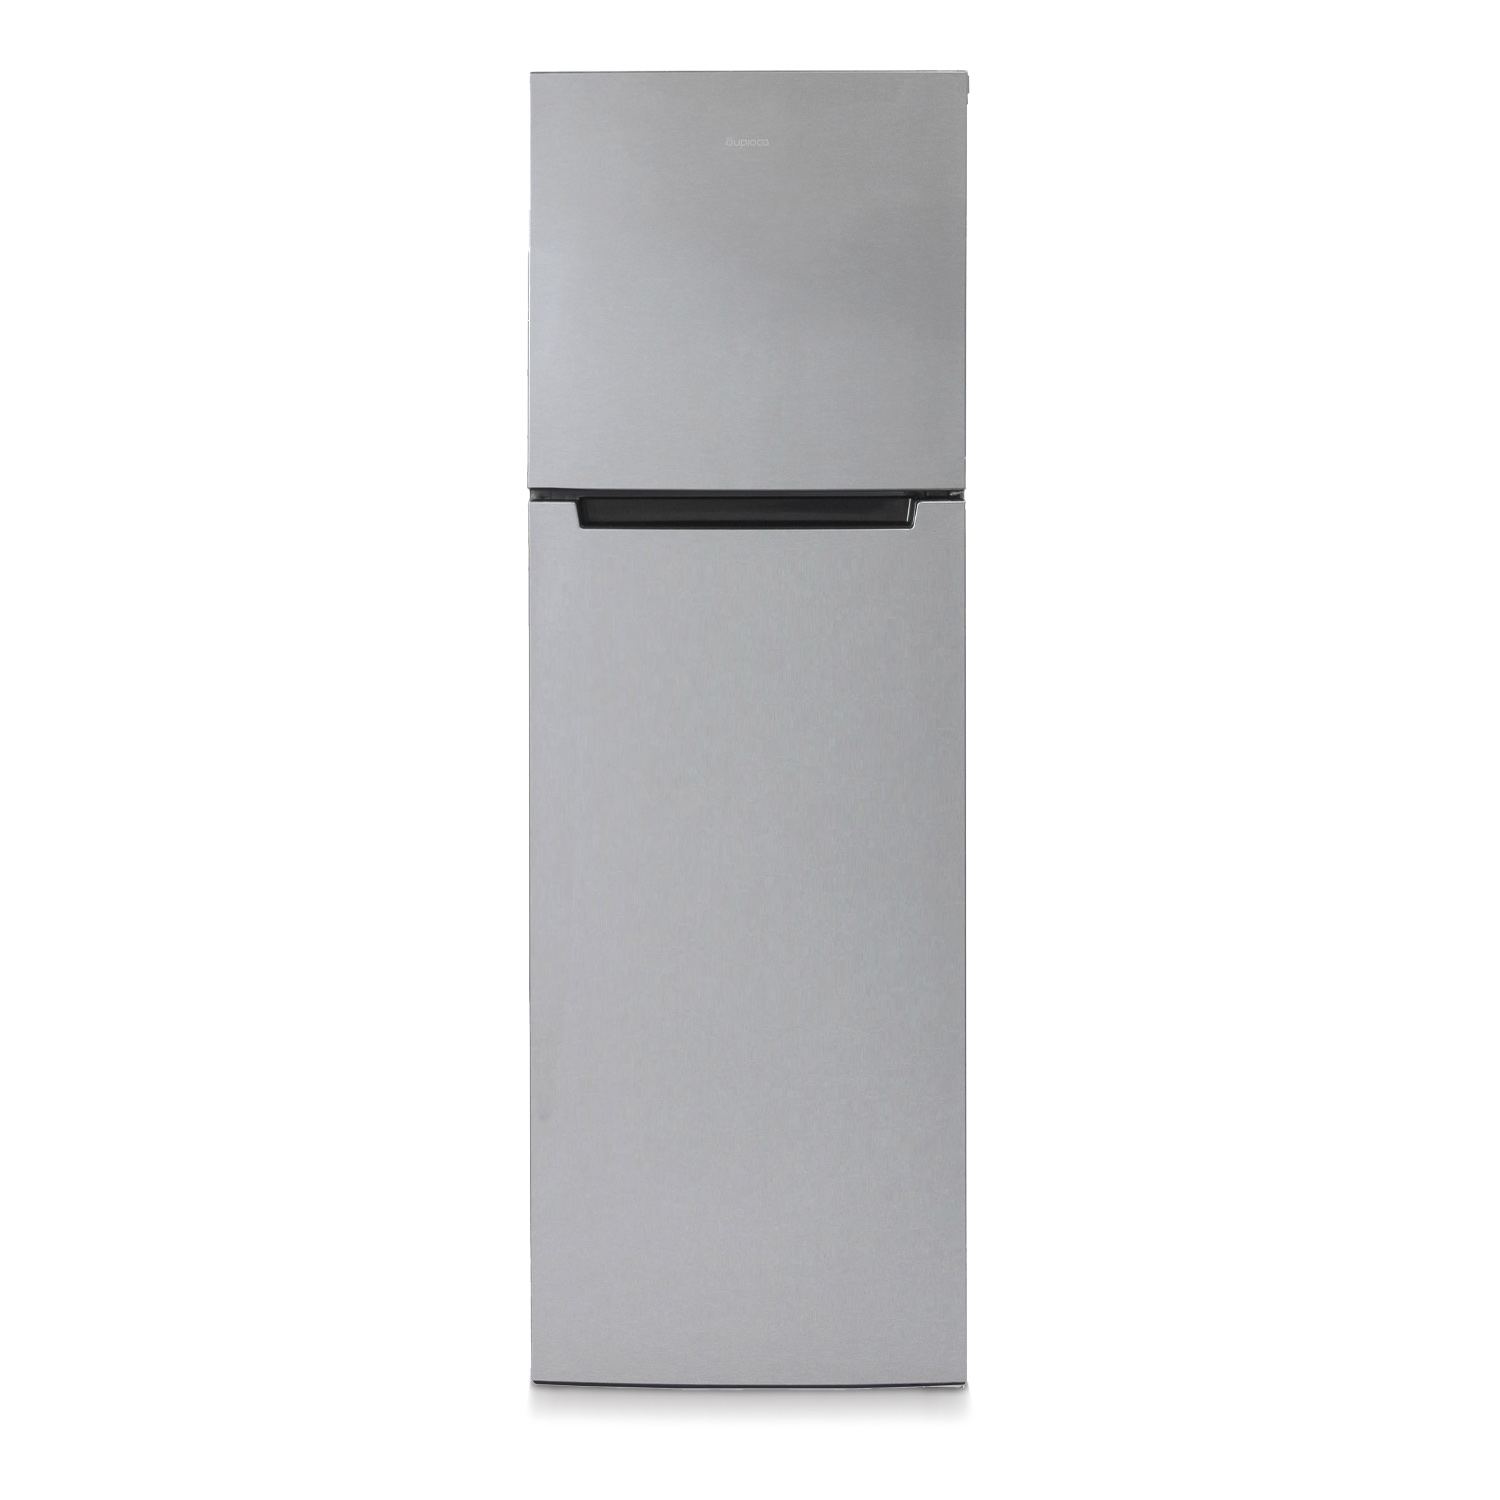 Холодильник Бирюса C6039 серебристый холодильник бирюса m6049 серебристый